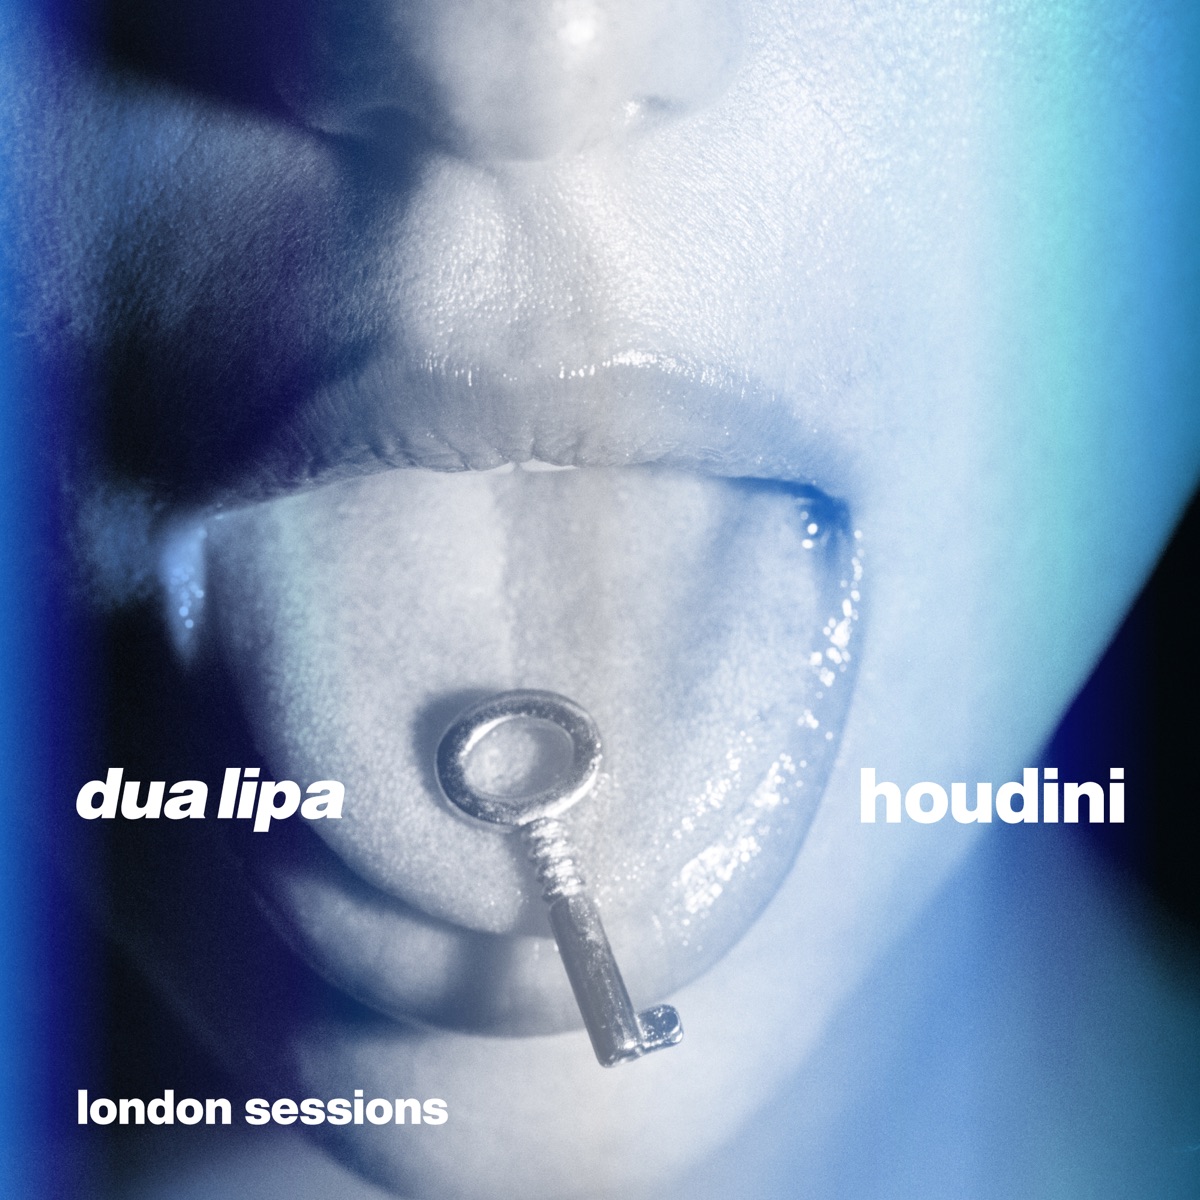 ‎Houdini (London Sessions) - Single - Album by Dua Lipa - Apple Music